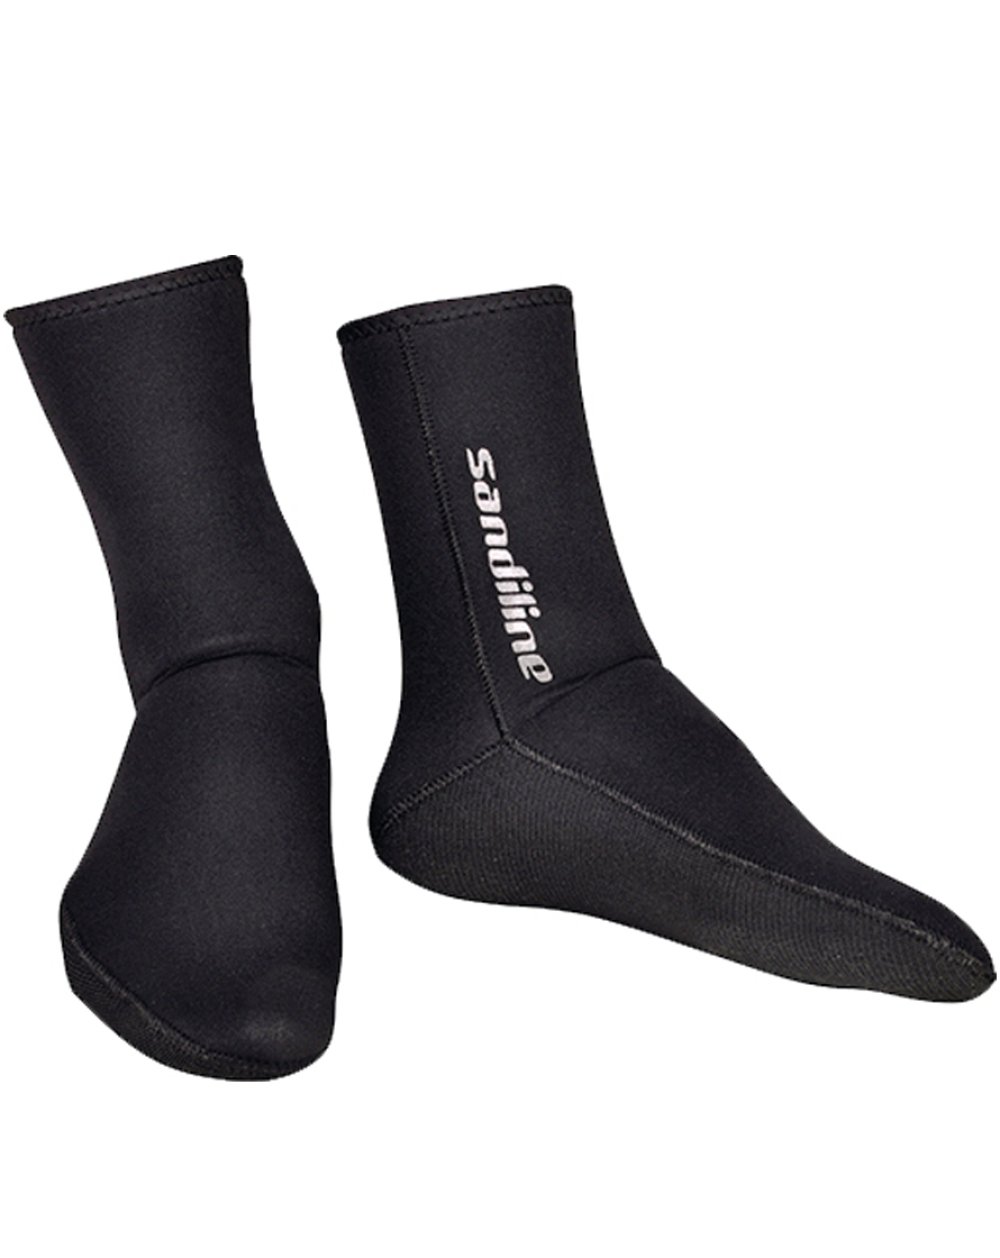 SANDILINE Socks Splash 30 - Gr. 42/43